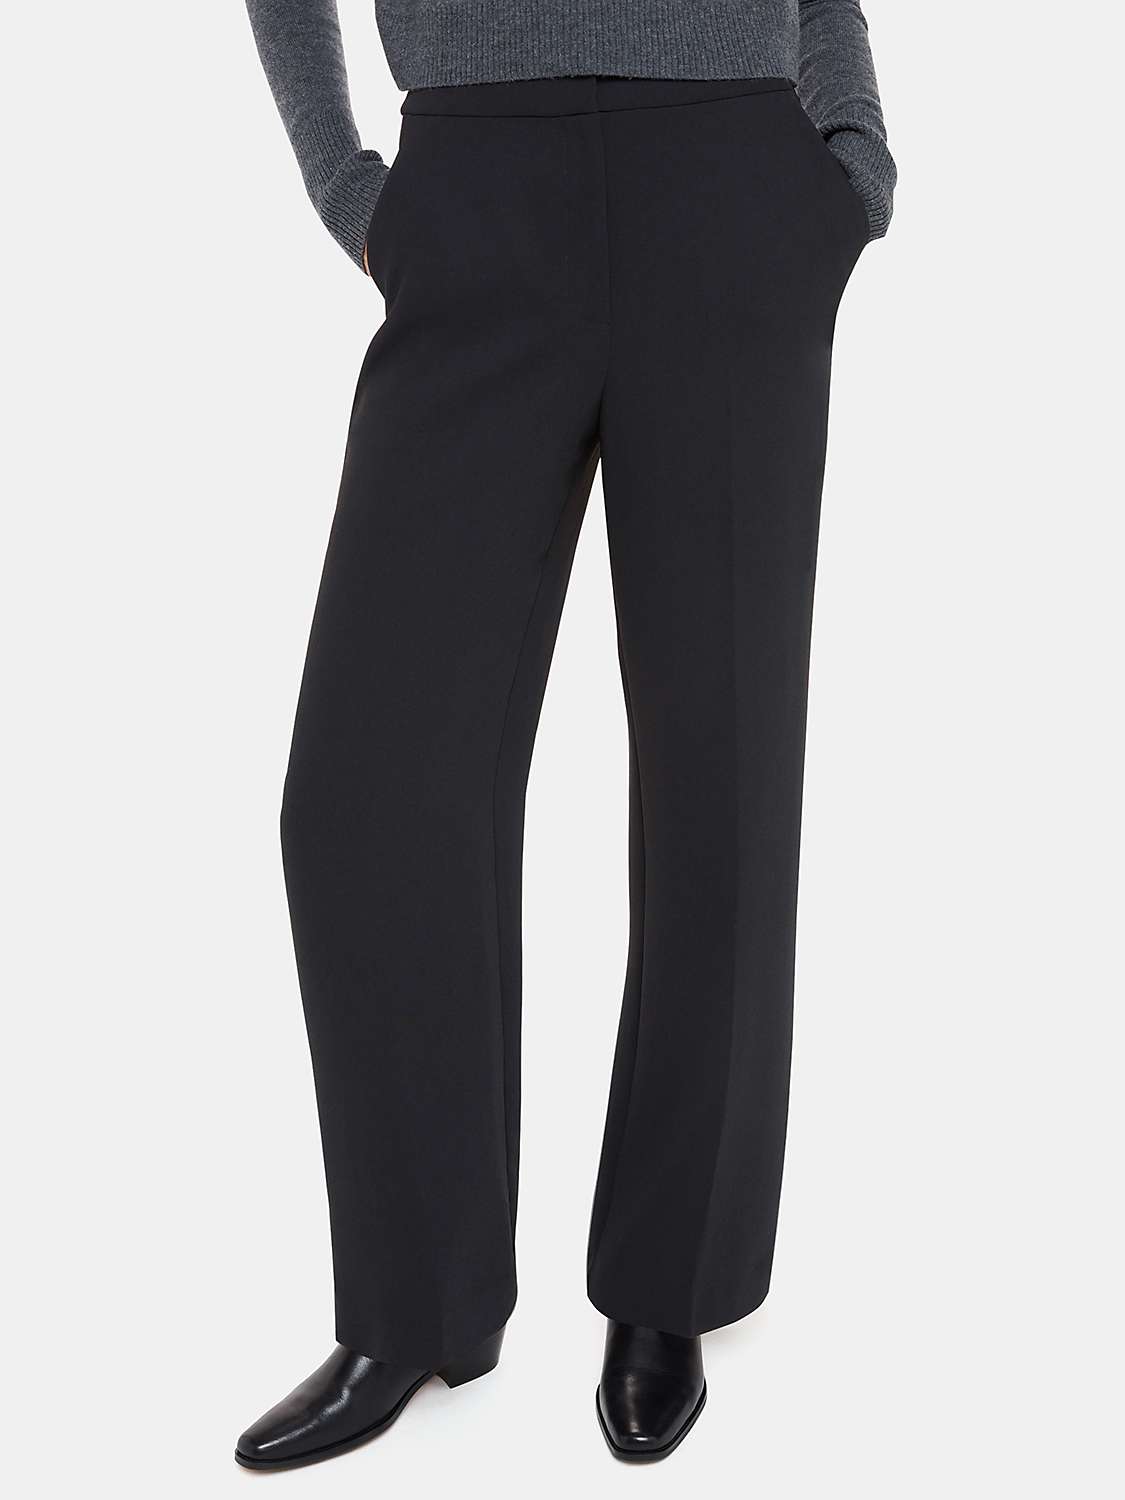 Buy Whistles Ultimate Full Length Trousers, Black Online at johnlewis.com